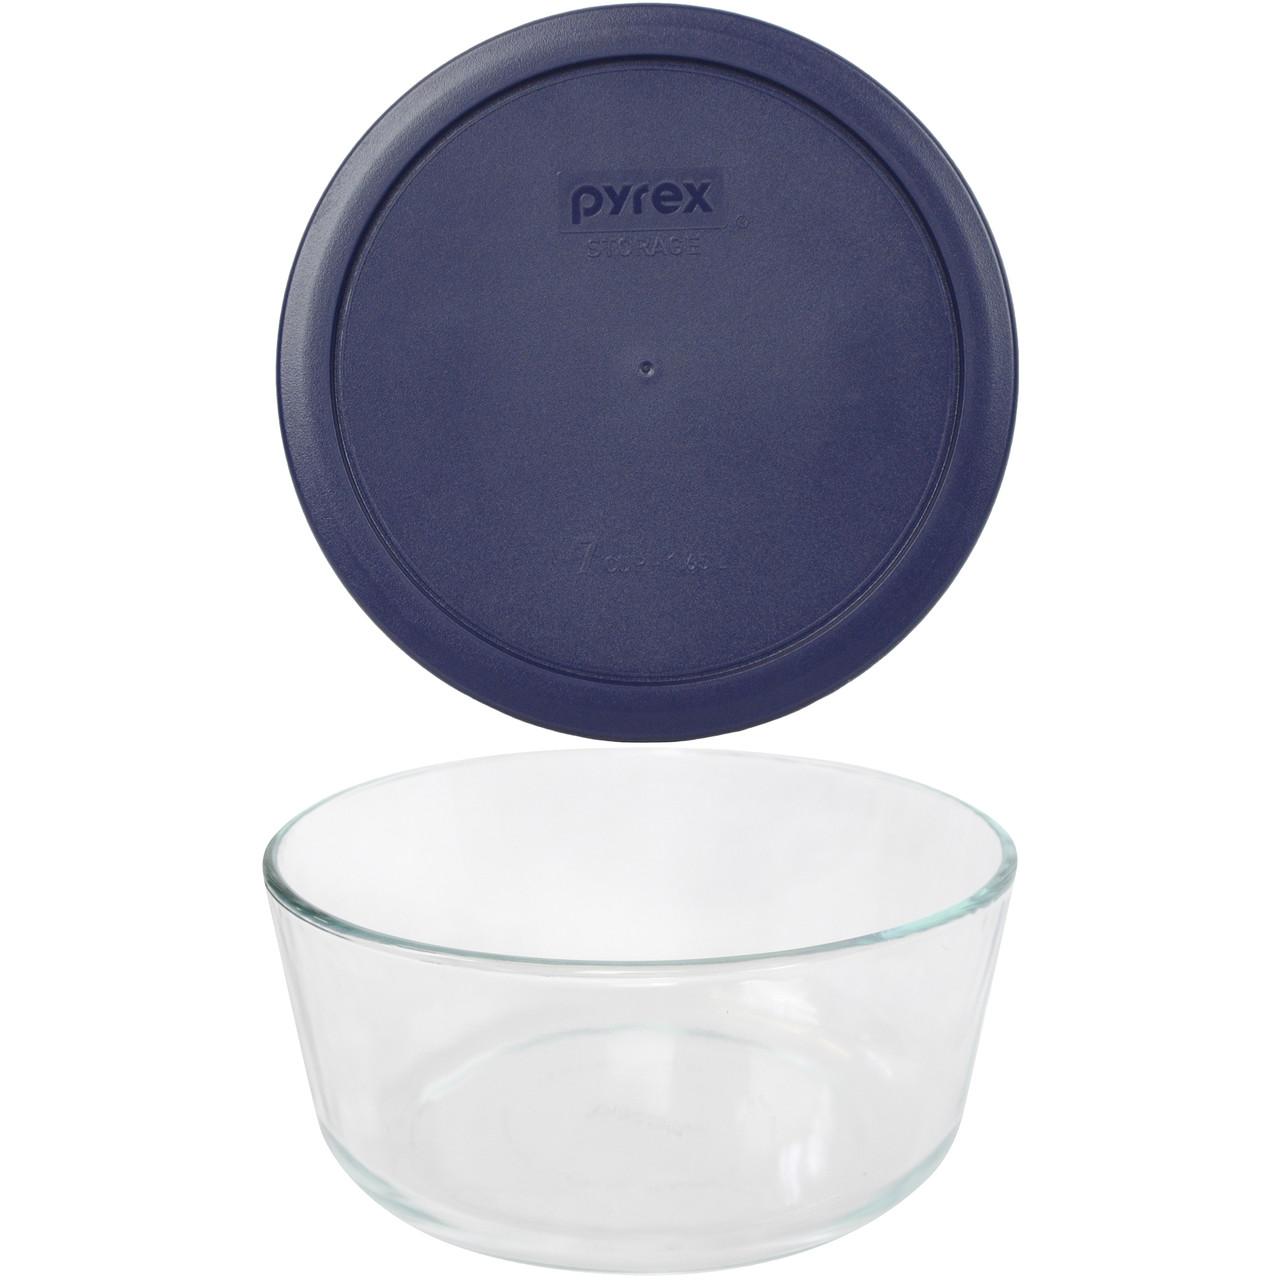 Pyrex 7201 4-Cup Glass Food Storage Bowl w/ 7201-PC Blue